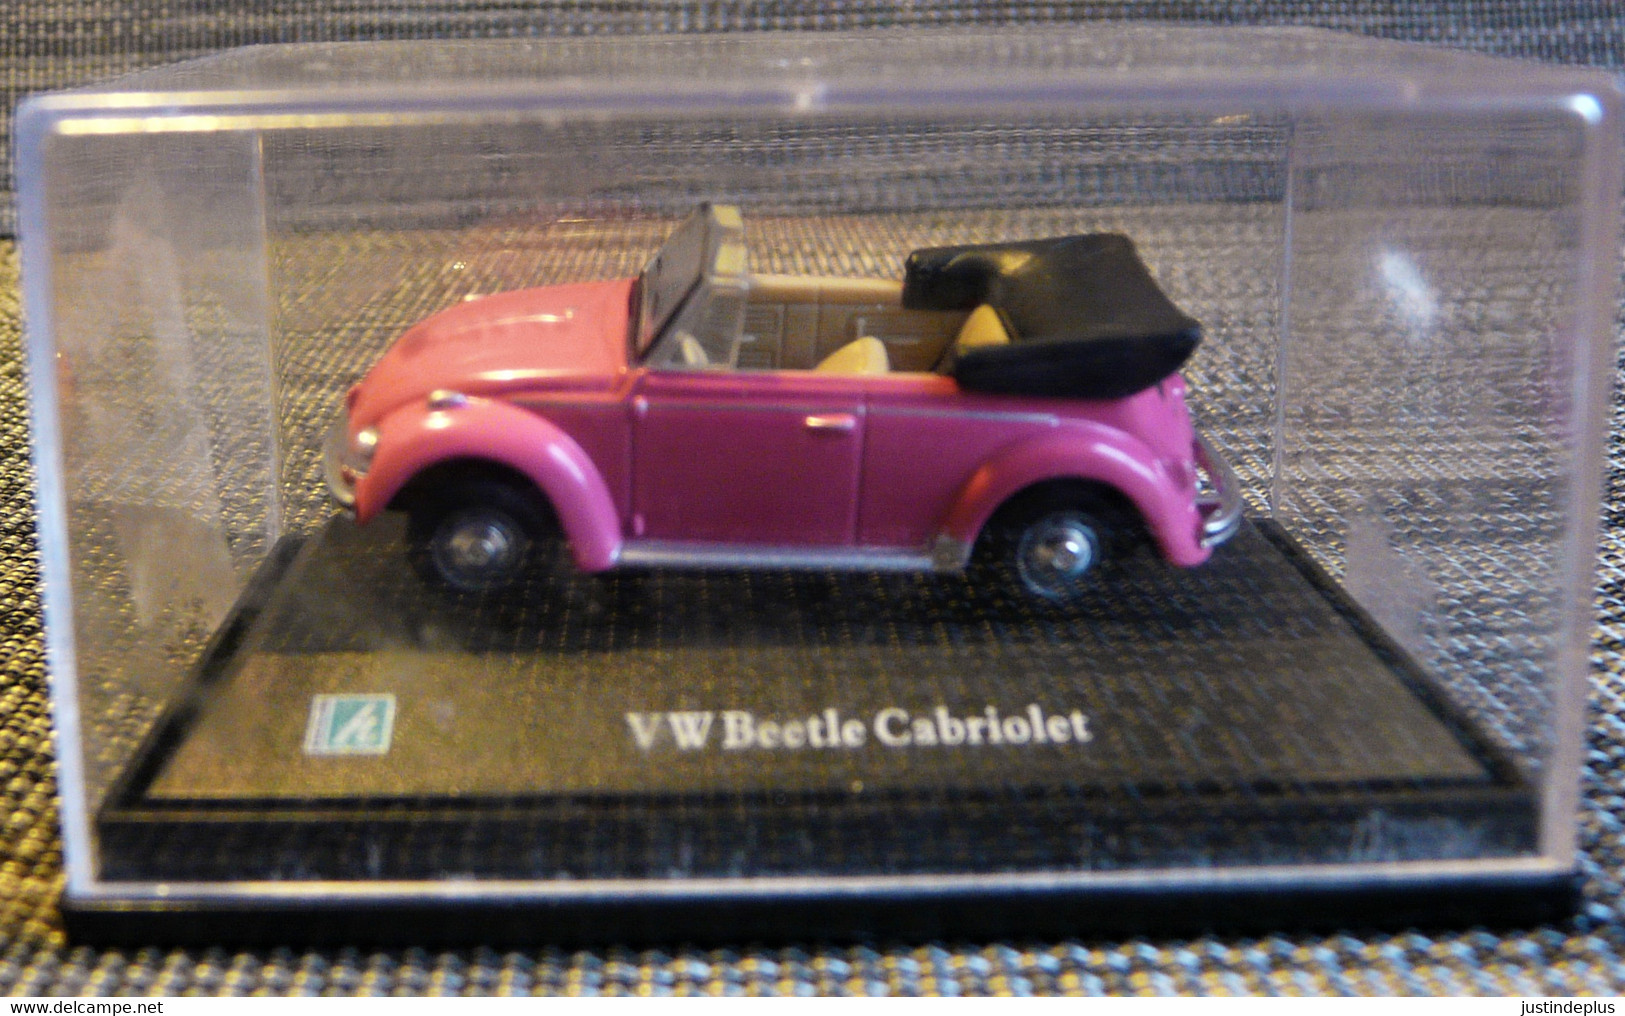 VW BEETLE CABRIOLET ROSE WOLKSVAGEN COCCINELLE ECHELLE 1/72EME - Massstab 1:72